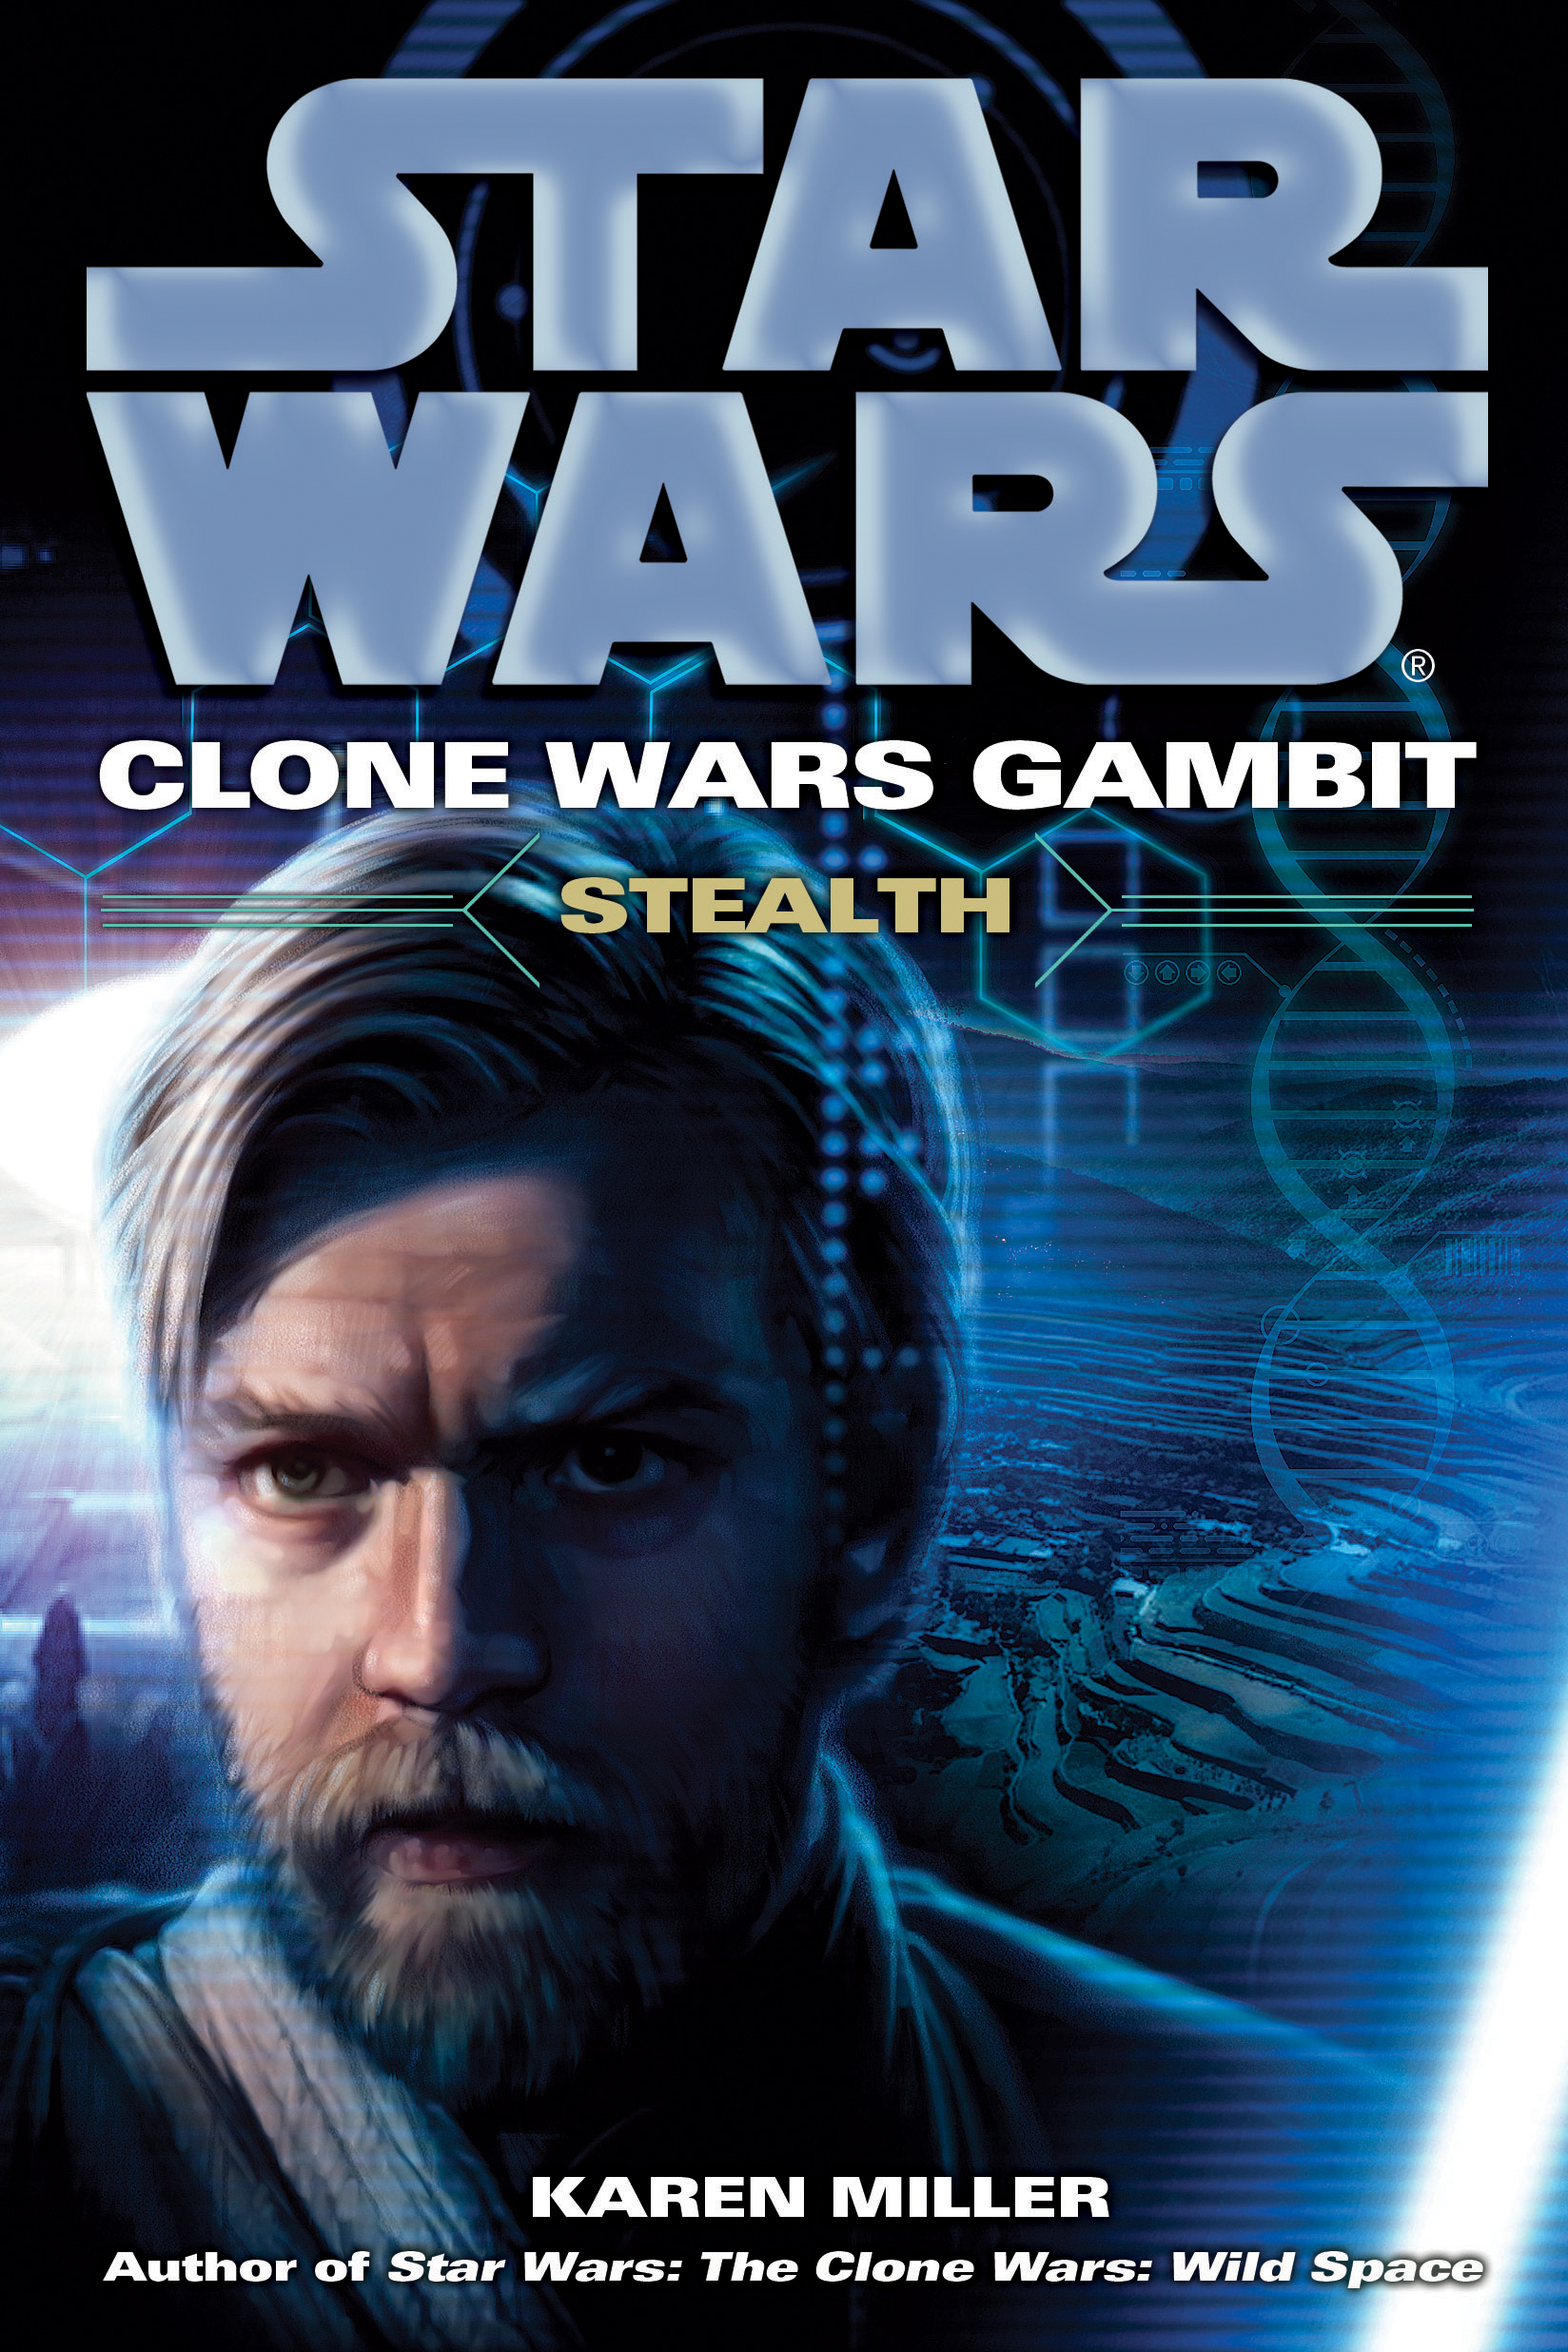 Star Wars: Clone Wars Gambit